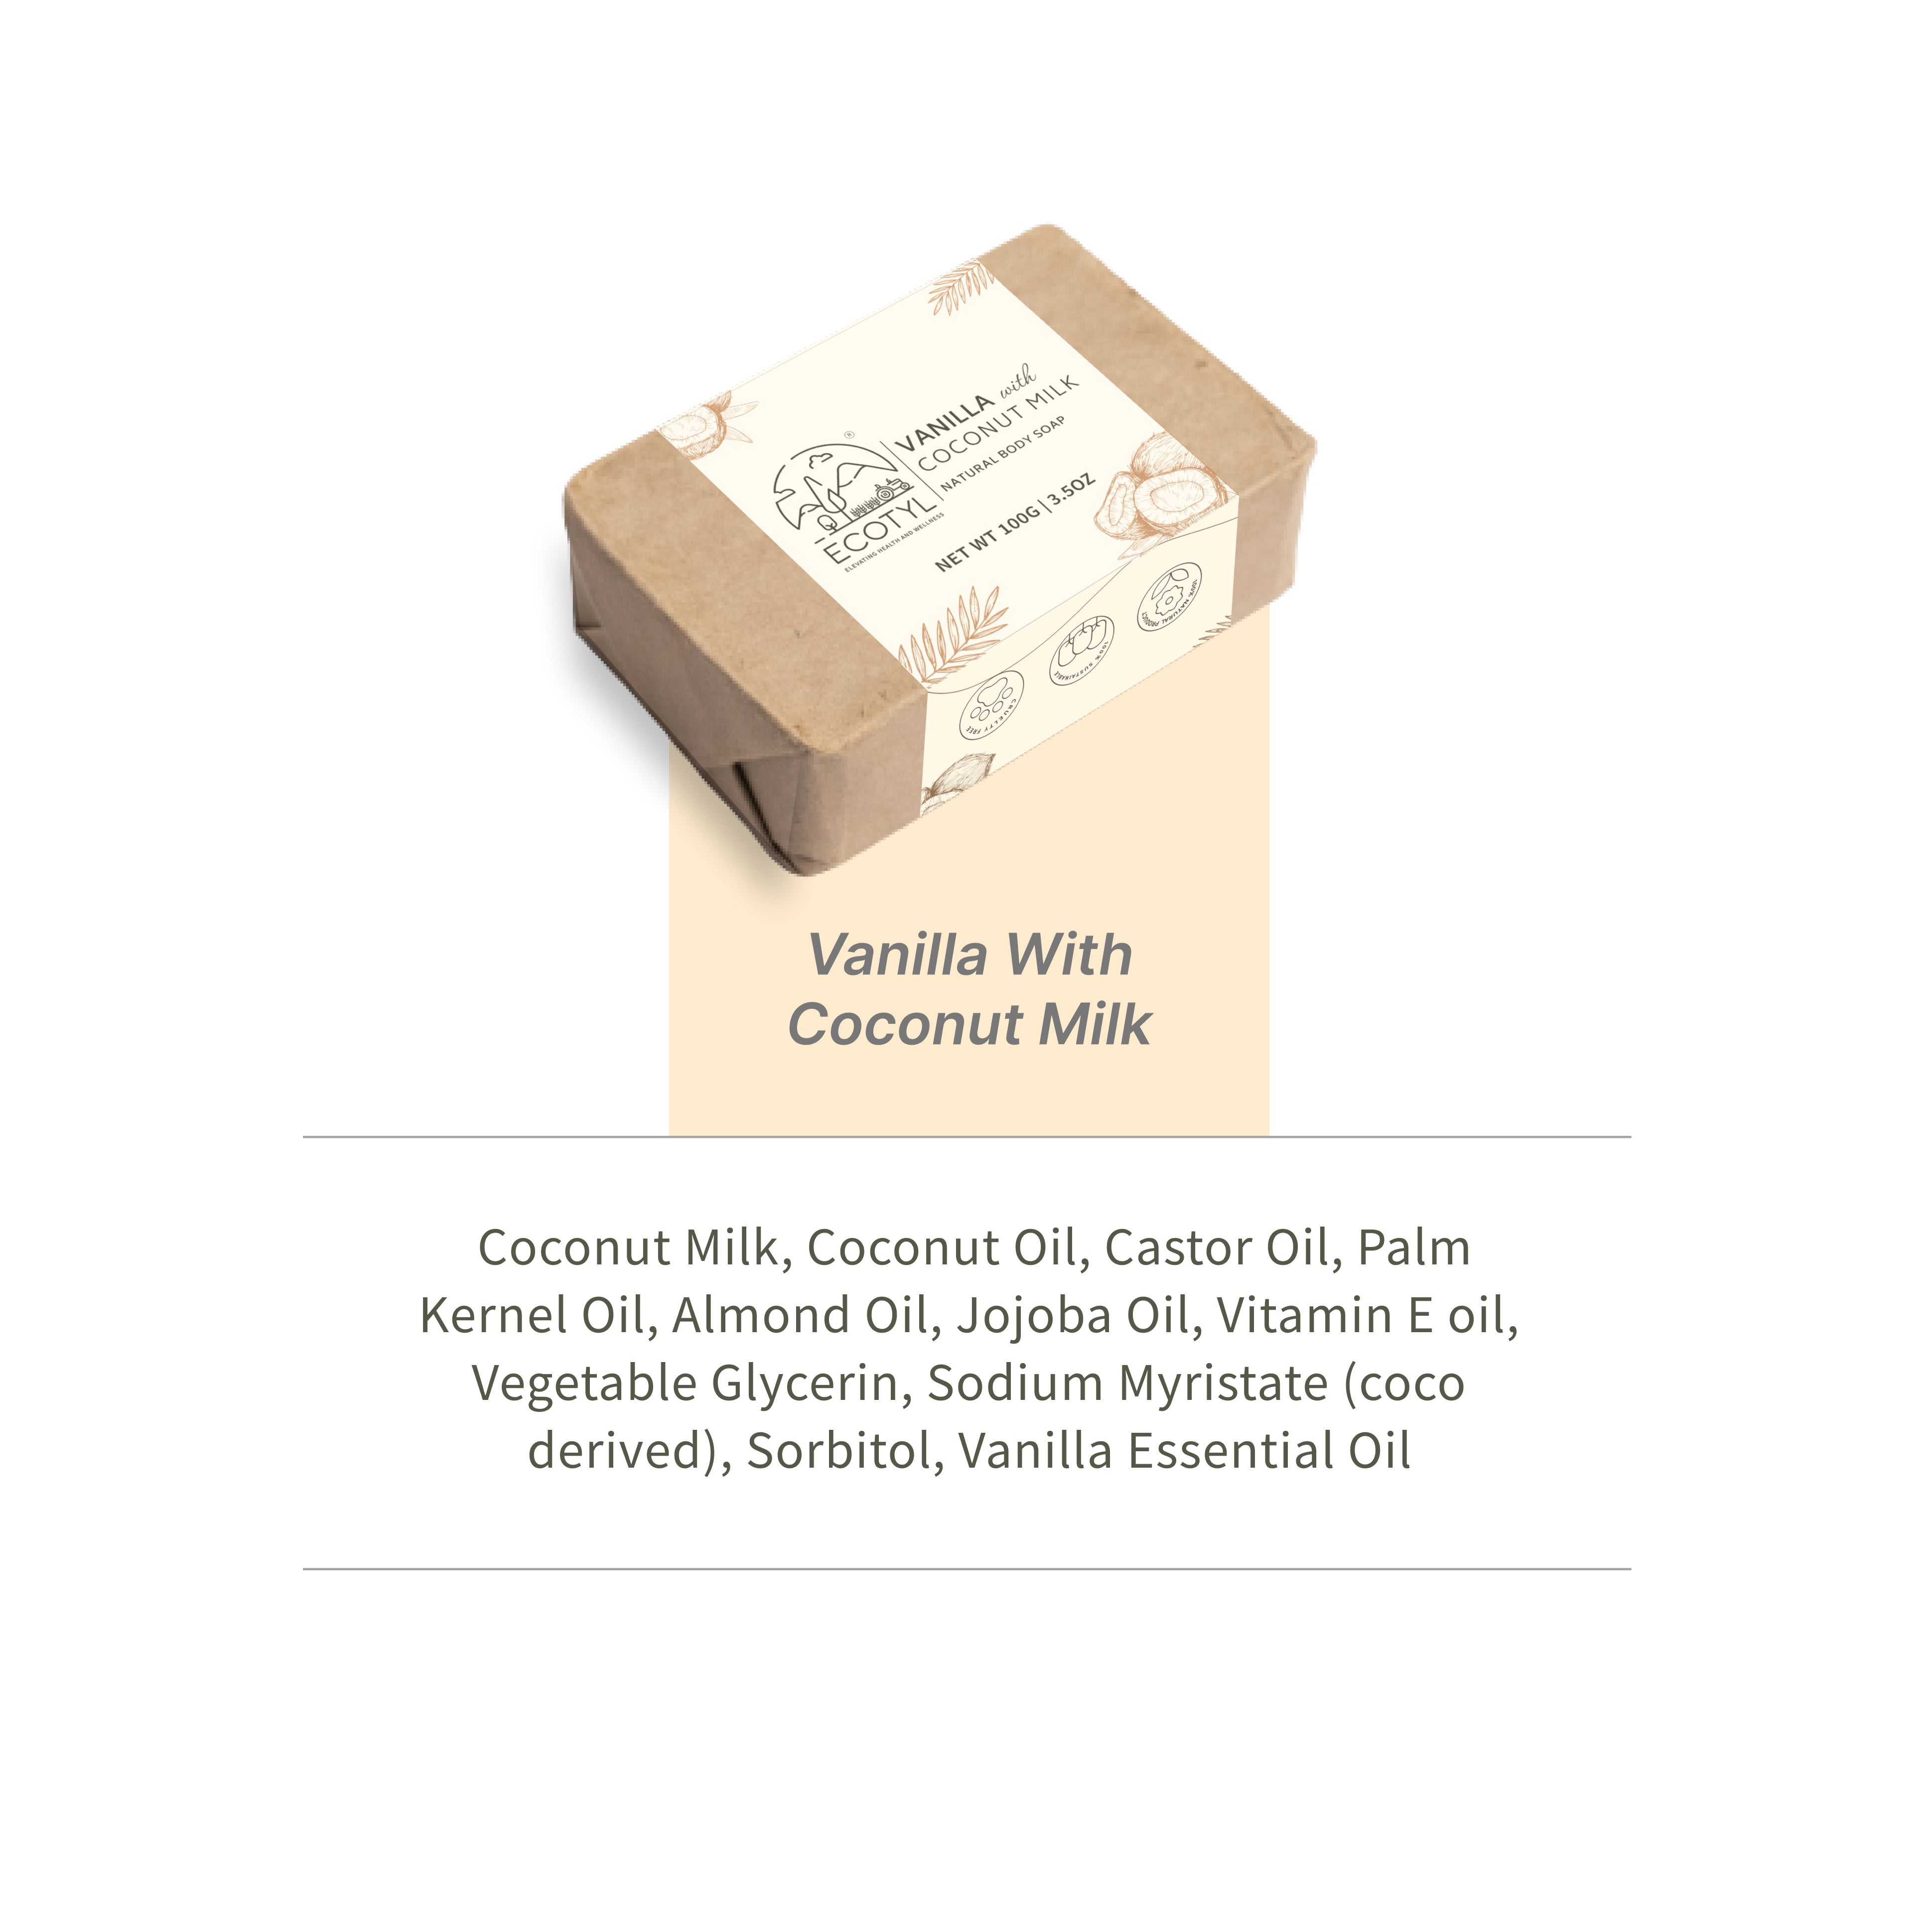 Ecotyl Coconut Milk Soap with Vanilla | 100% Natural | Nourishing & Hydrating | Set of 2